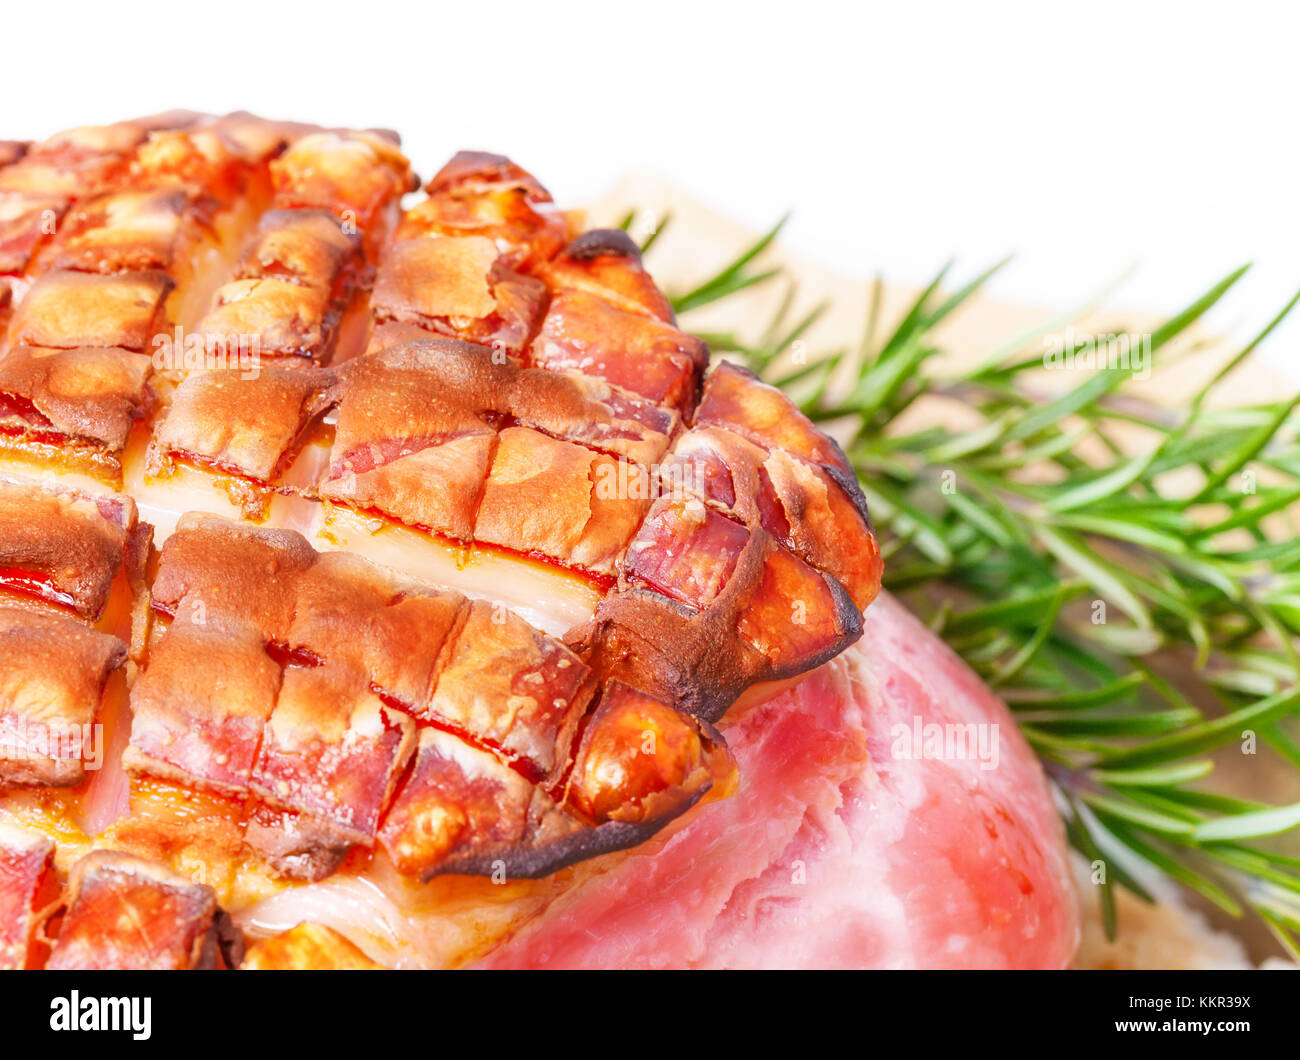 Pork roast with crackling, crunchy rind, close-up, Stock Photo